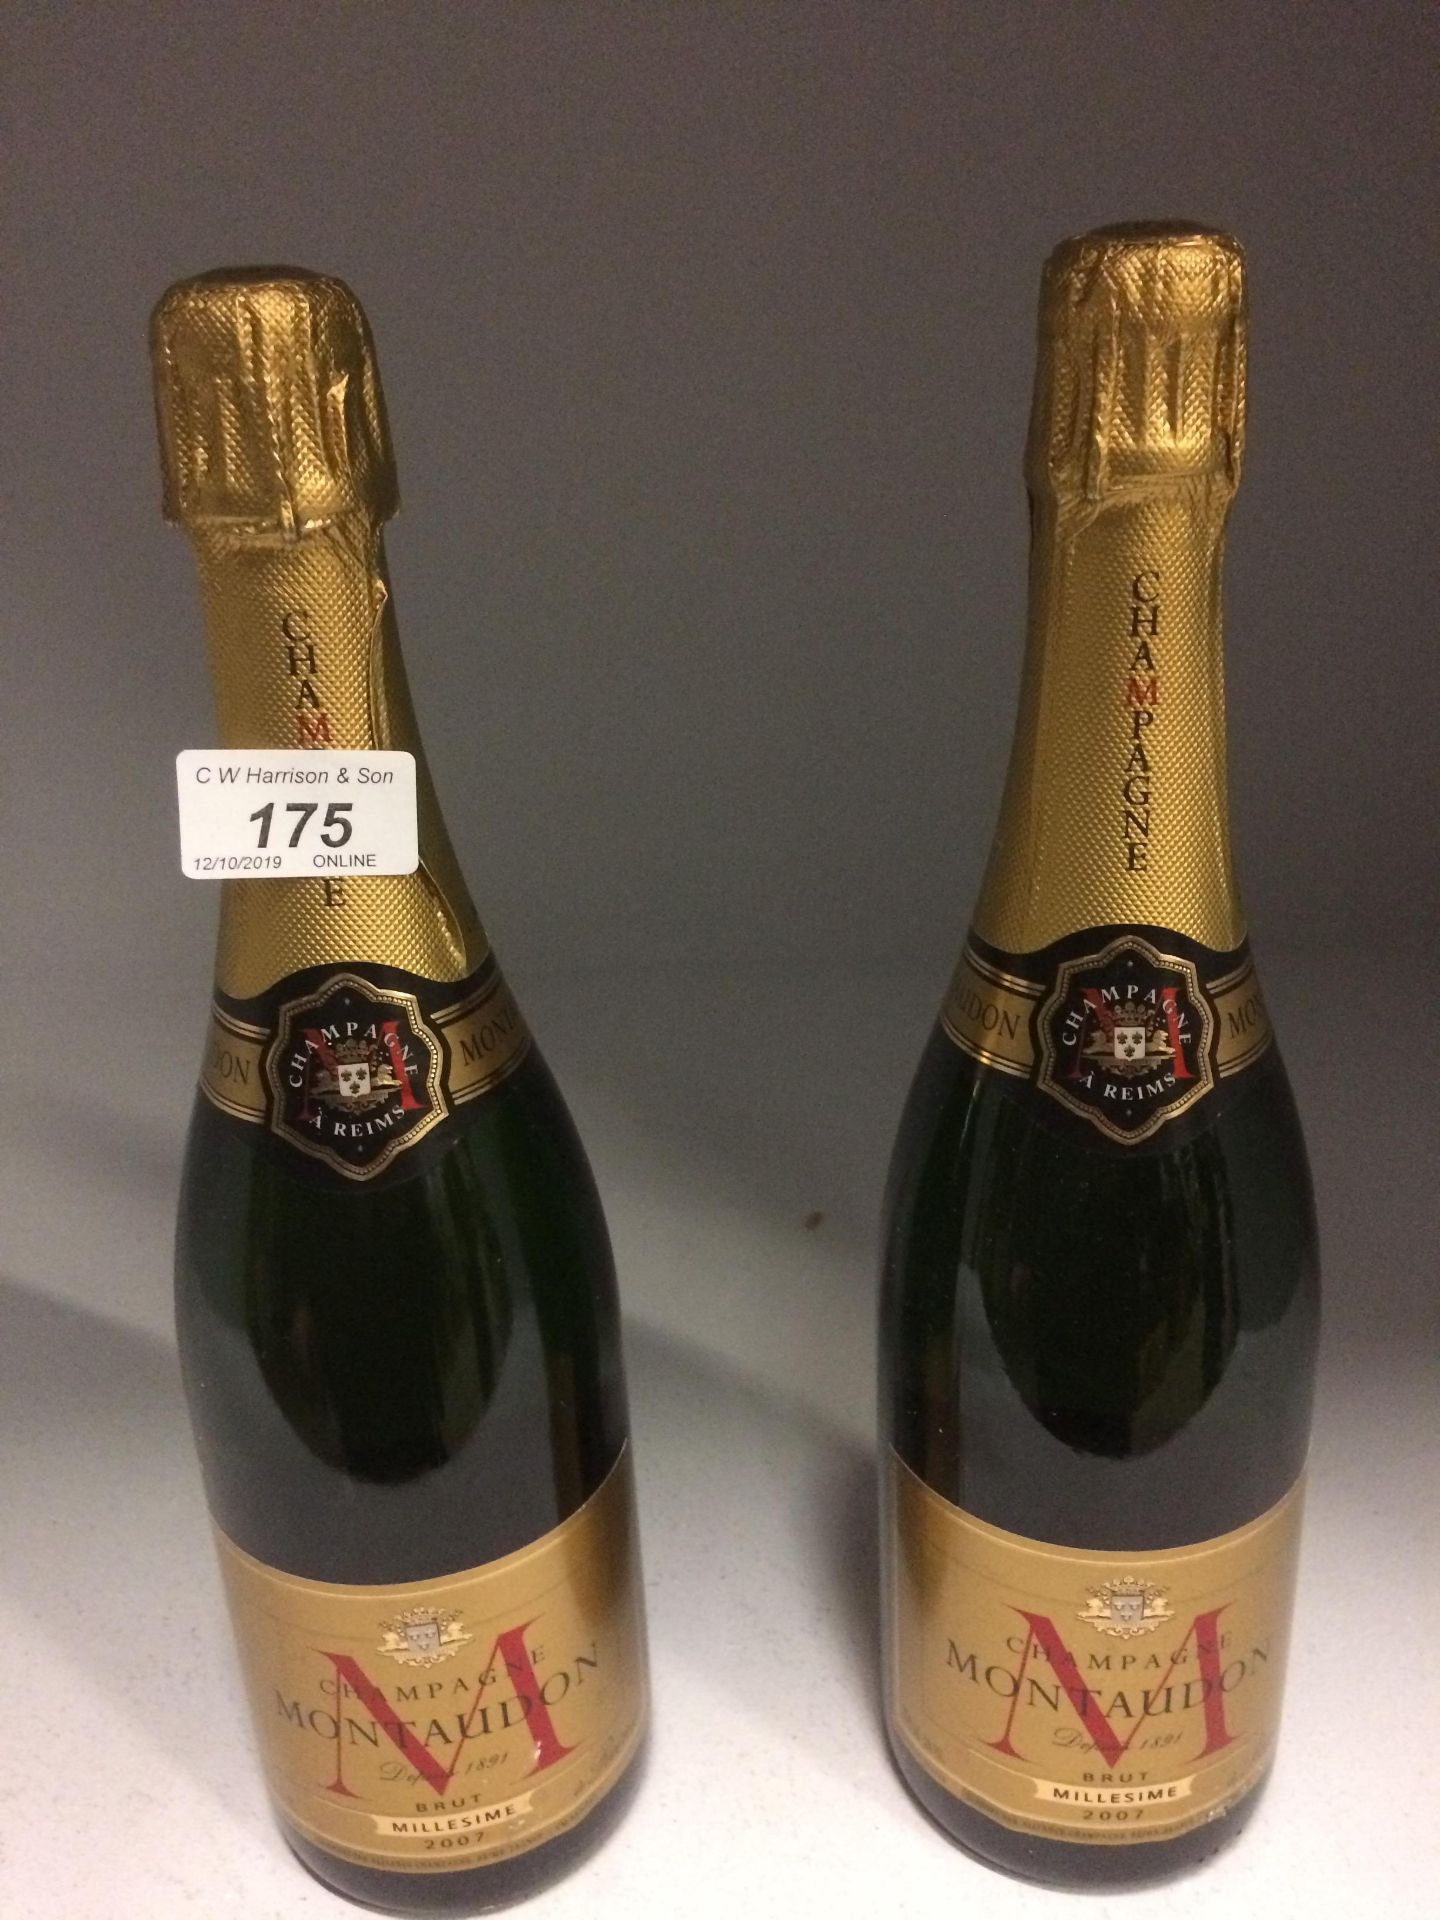 2 x 750ml bottles Montaudon champagne